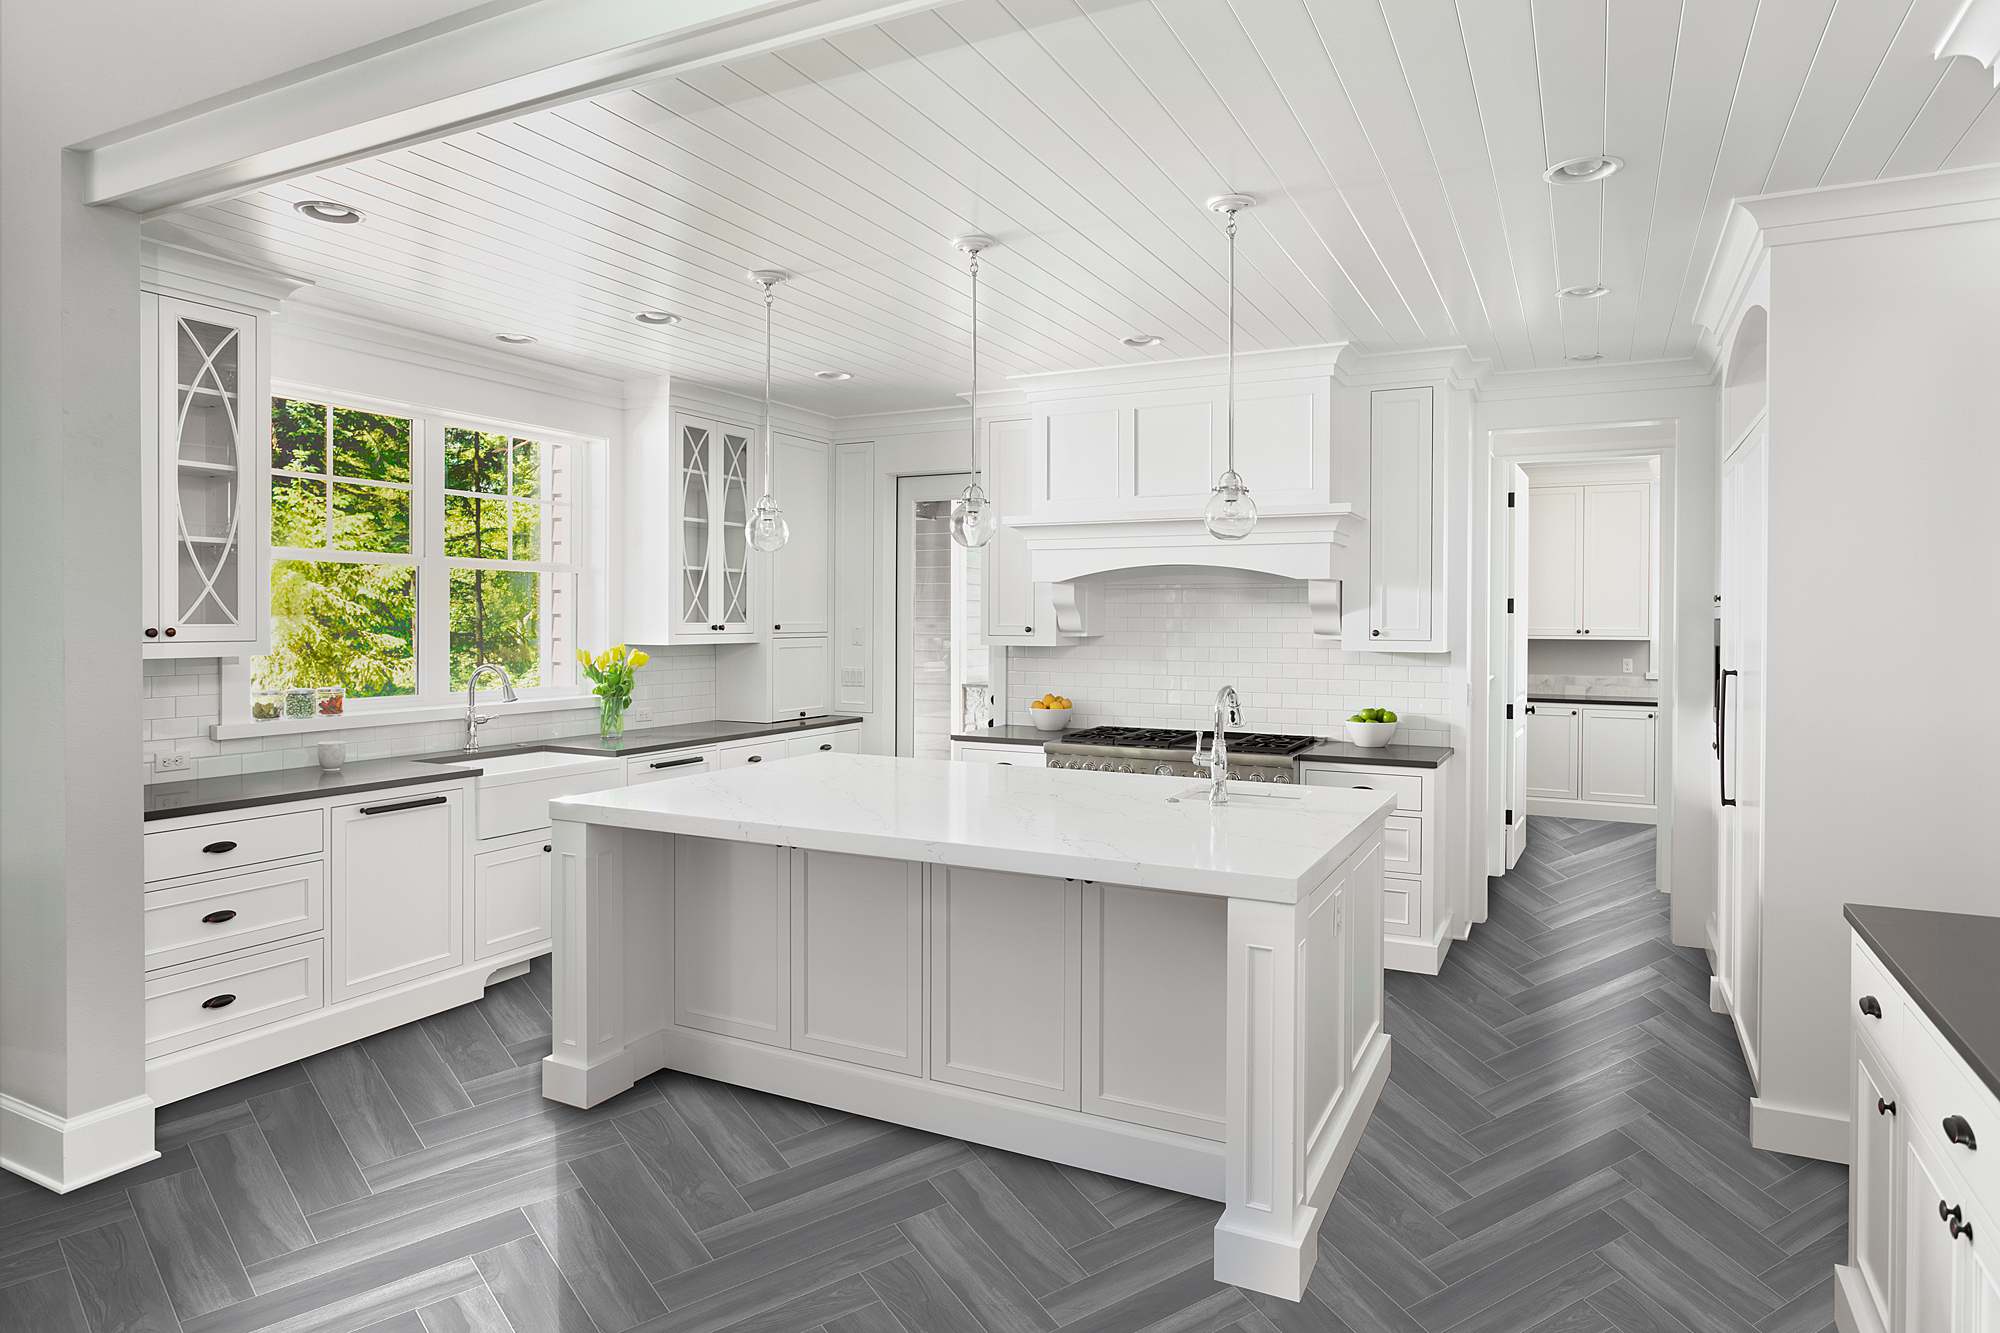 white kitchen gray herringbone pattern floor resilient flooring options responsible environment lasting durable flooring options